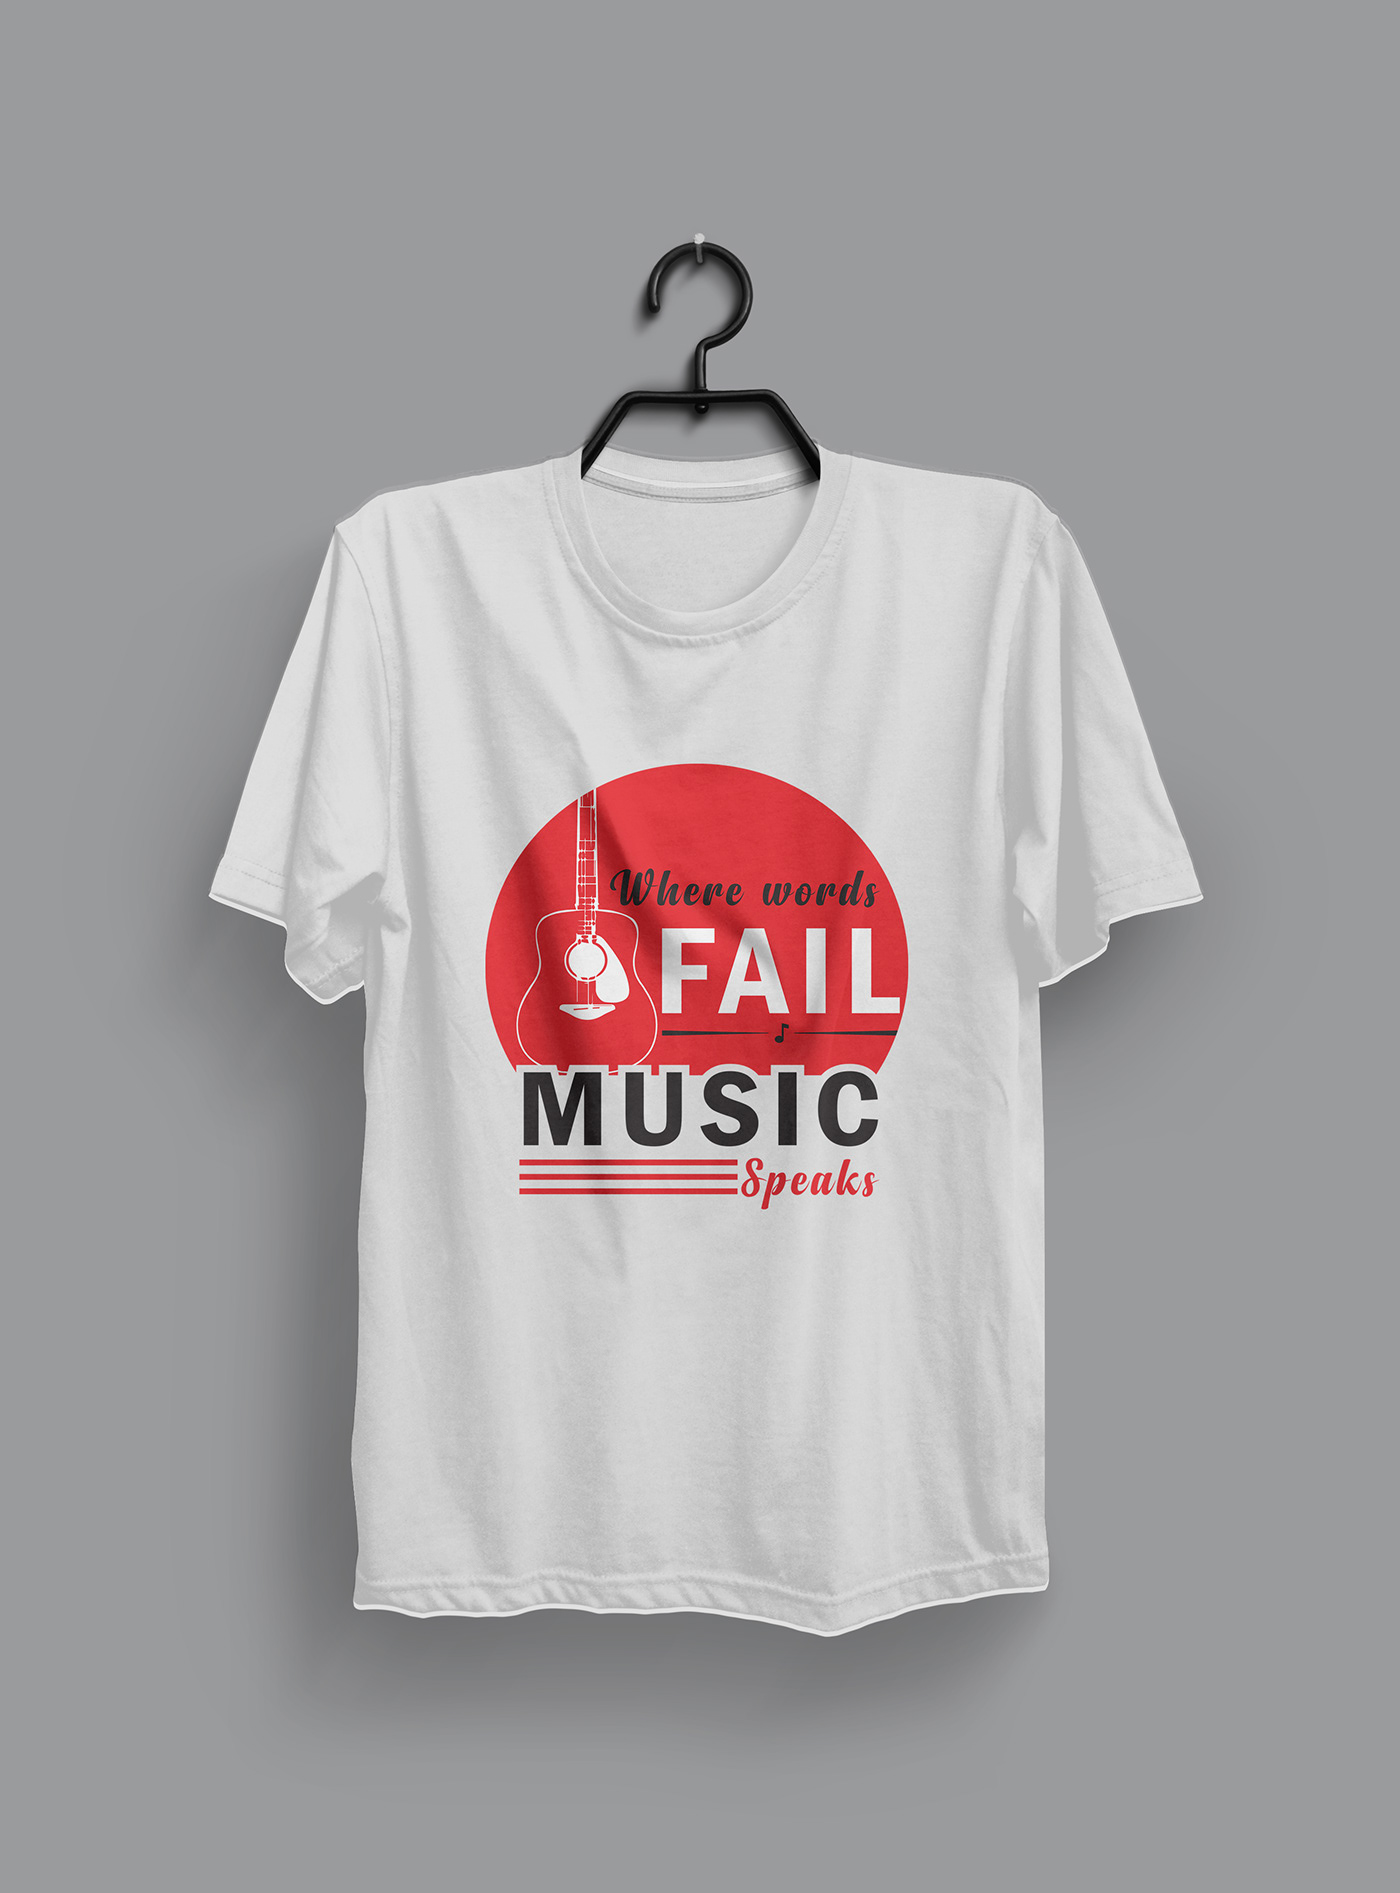 t-shirt, illustration, rock music, single line, surround sound, guitar pick, casual clothing, hit